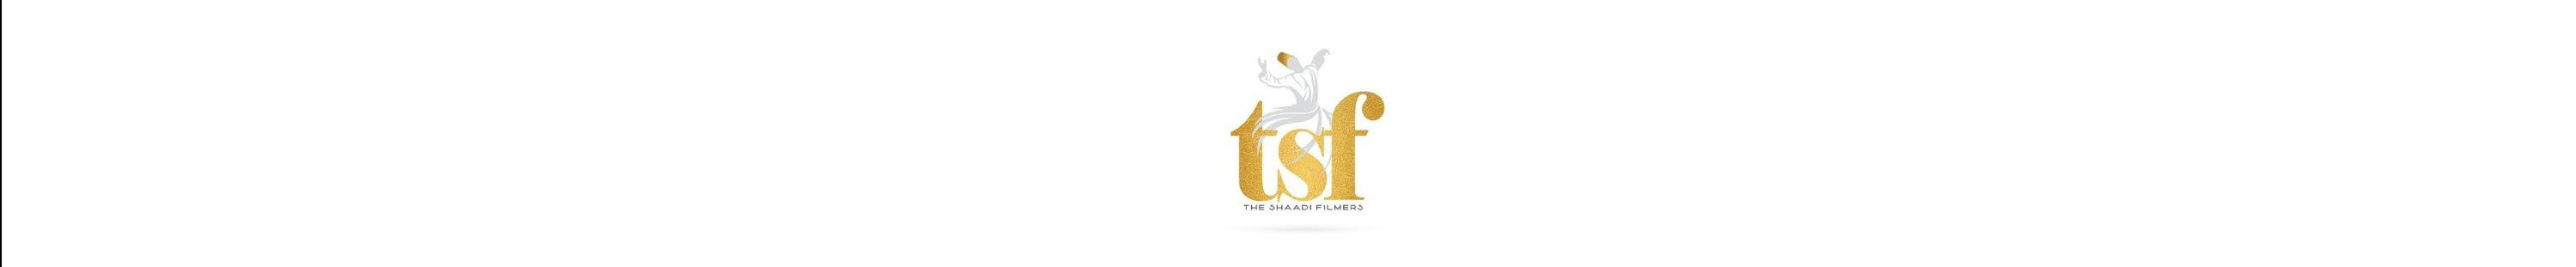 Баннер профиля the shaadi filmers